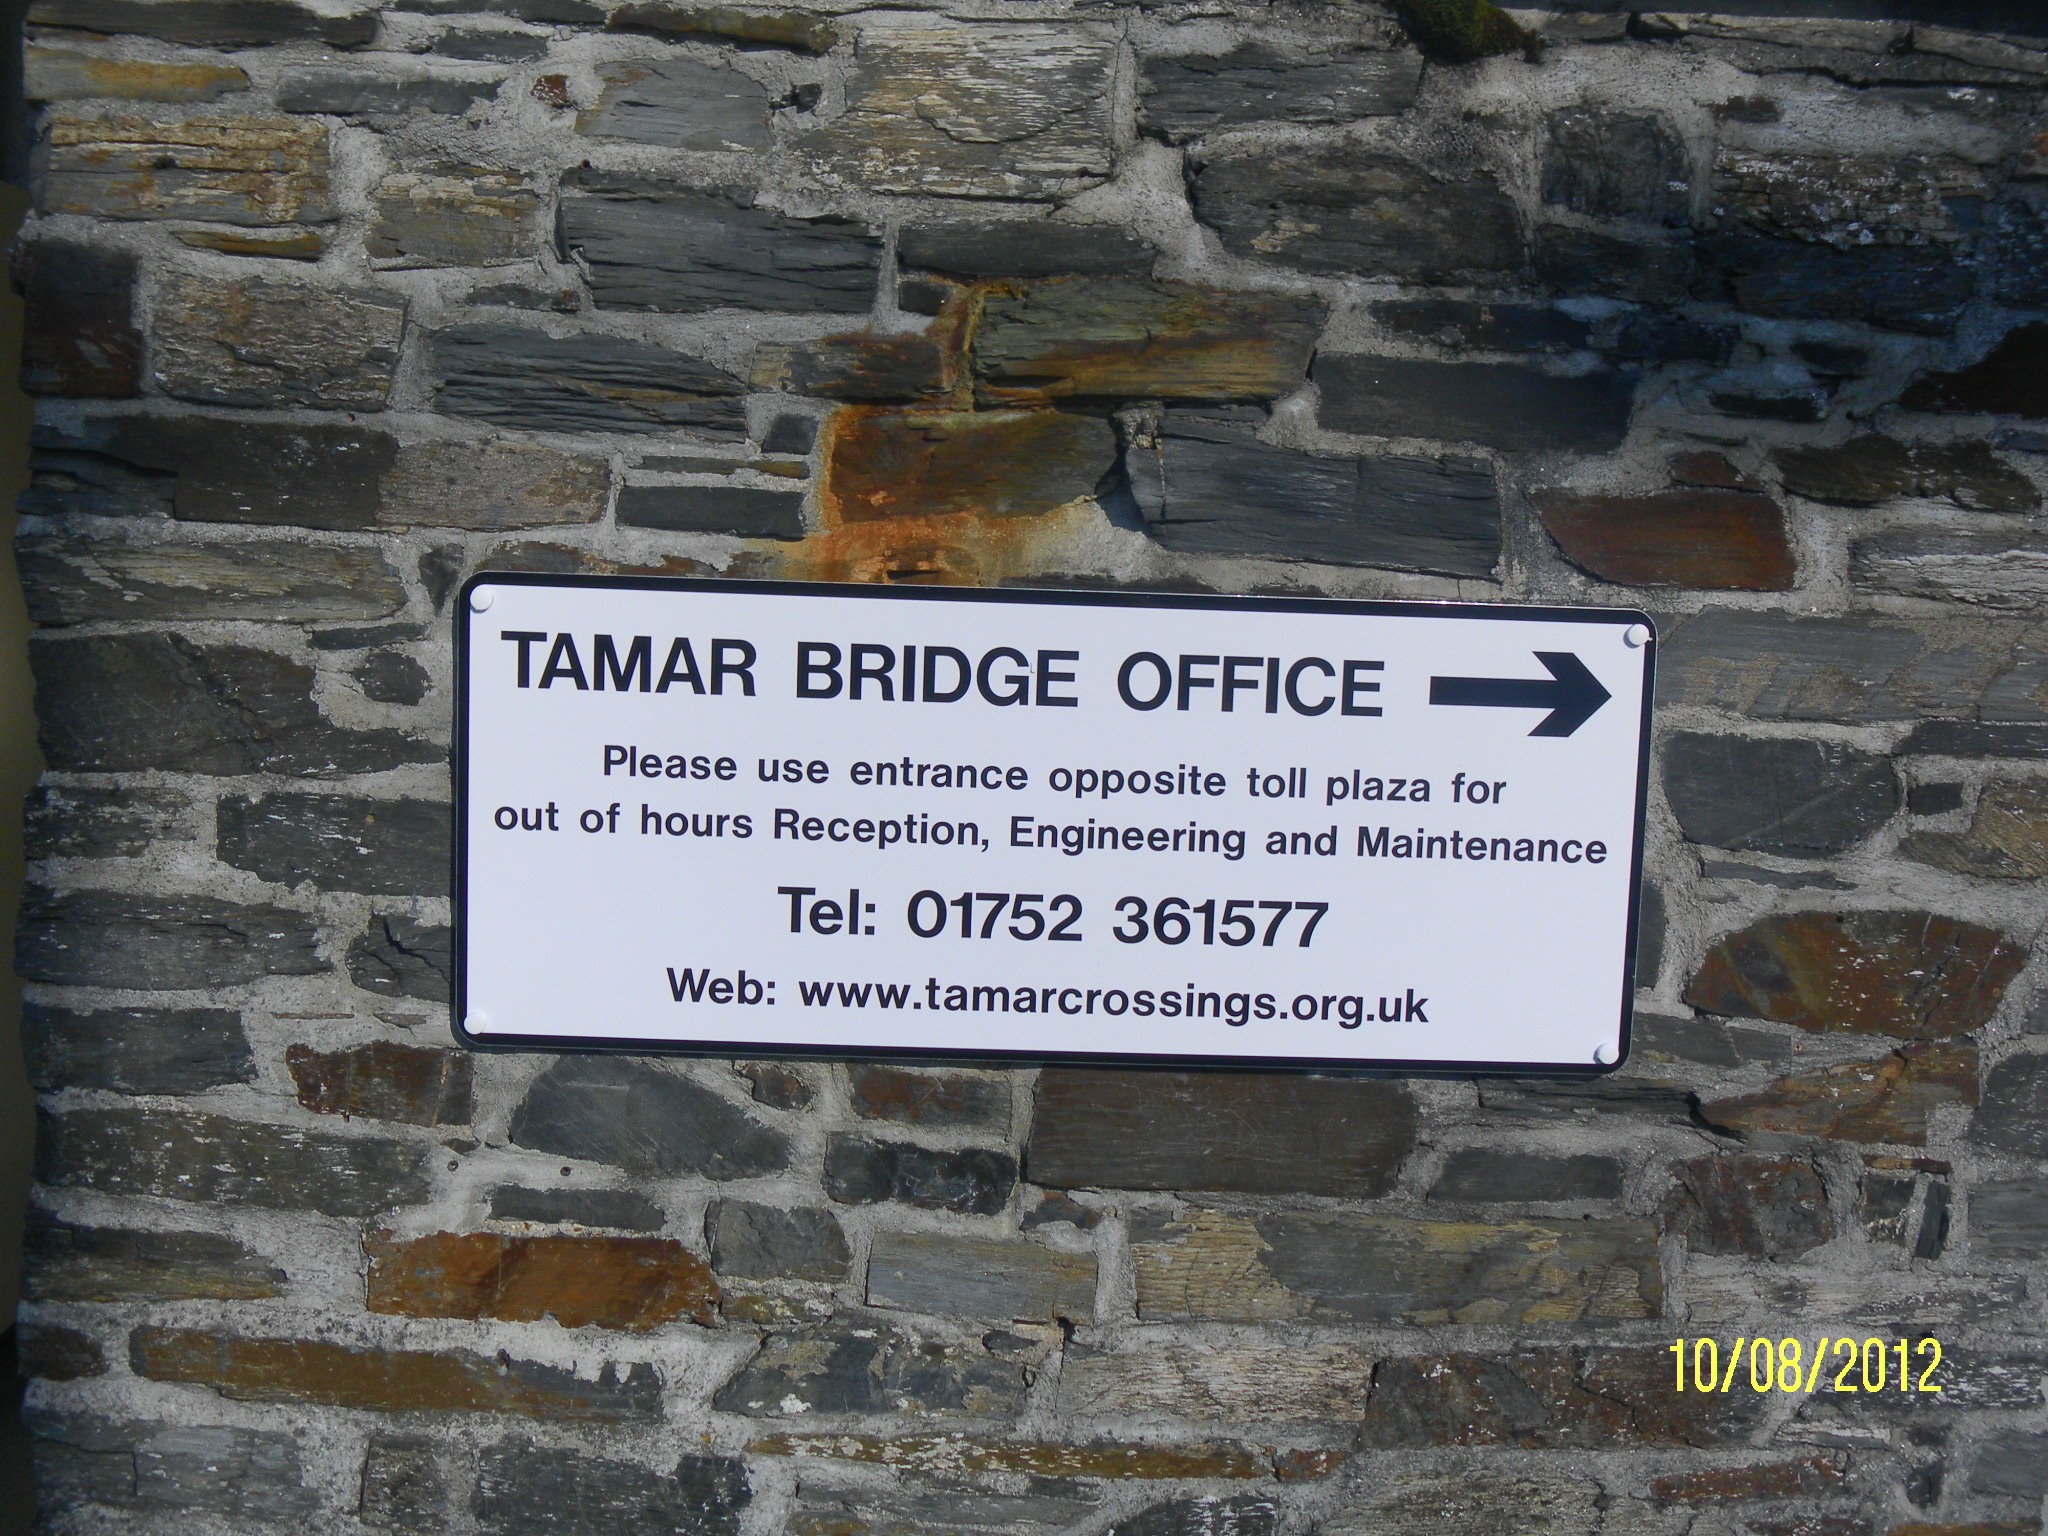 The Tamar Bridge